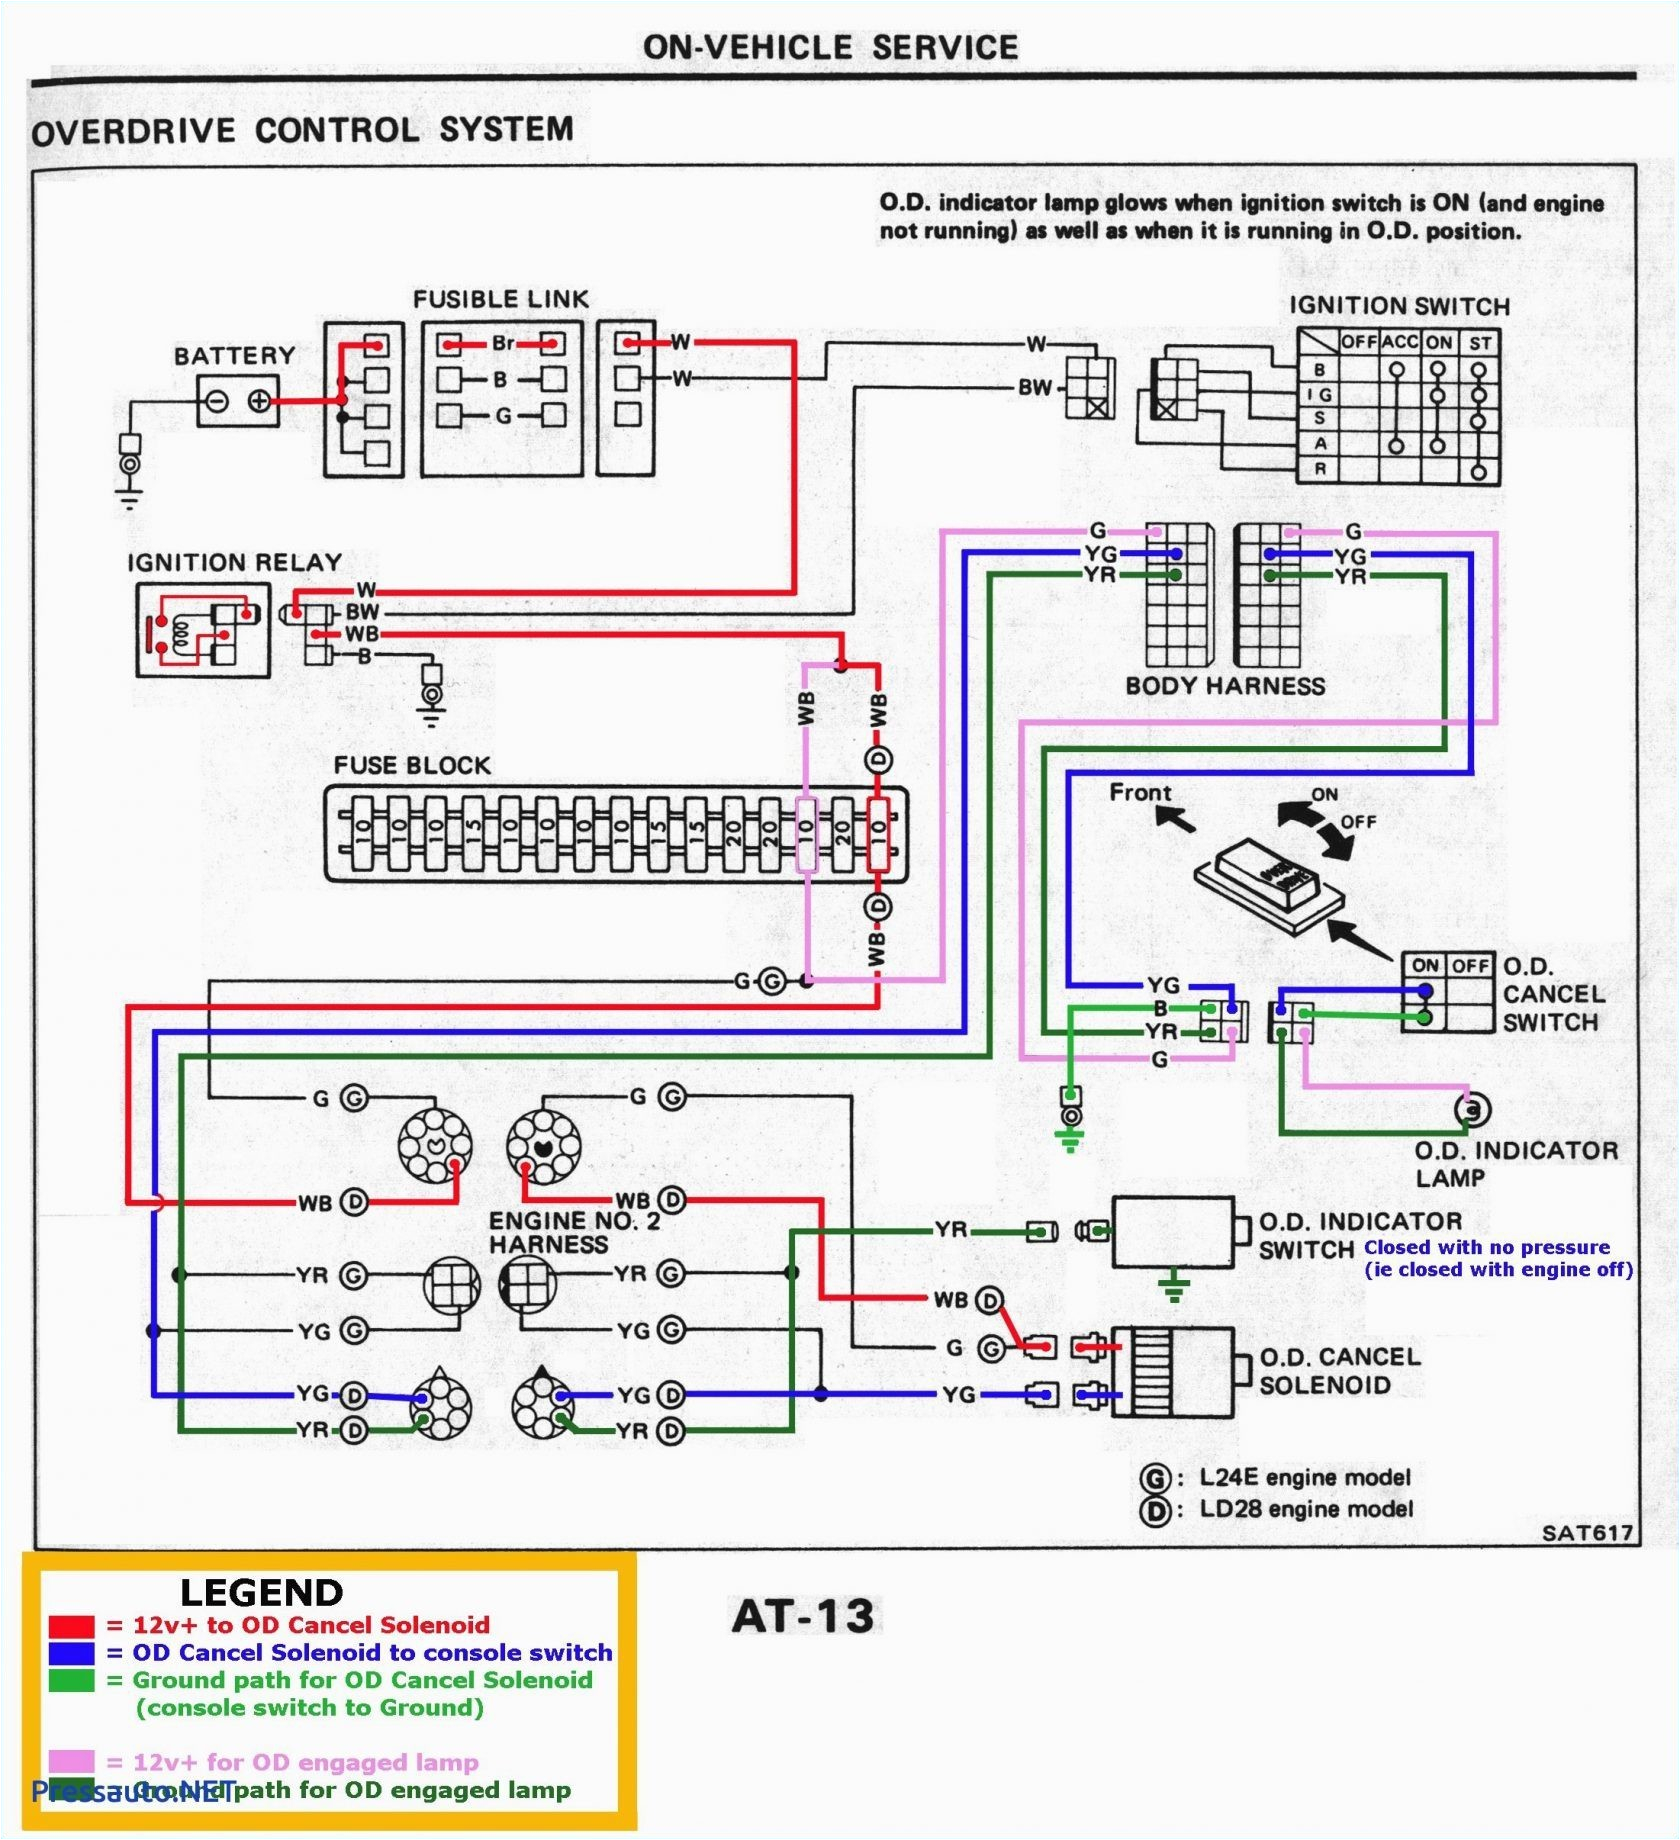 John Deere 2755 Wiring Diagram Apexis Wiring Diagram Blog Wiring Diagram